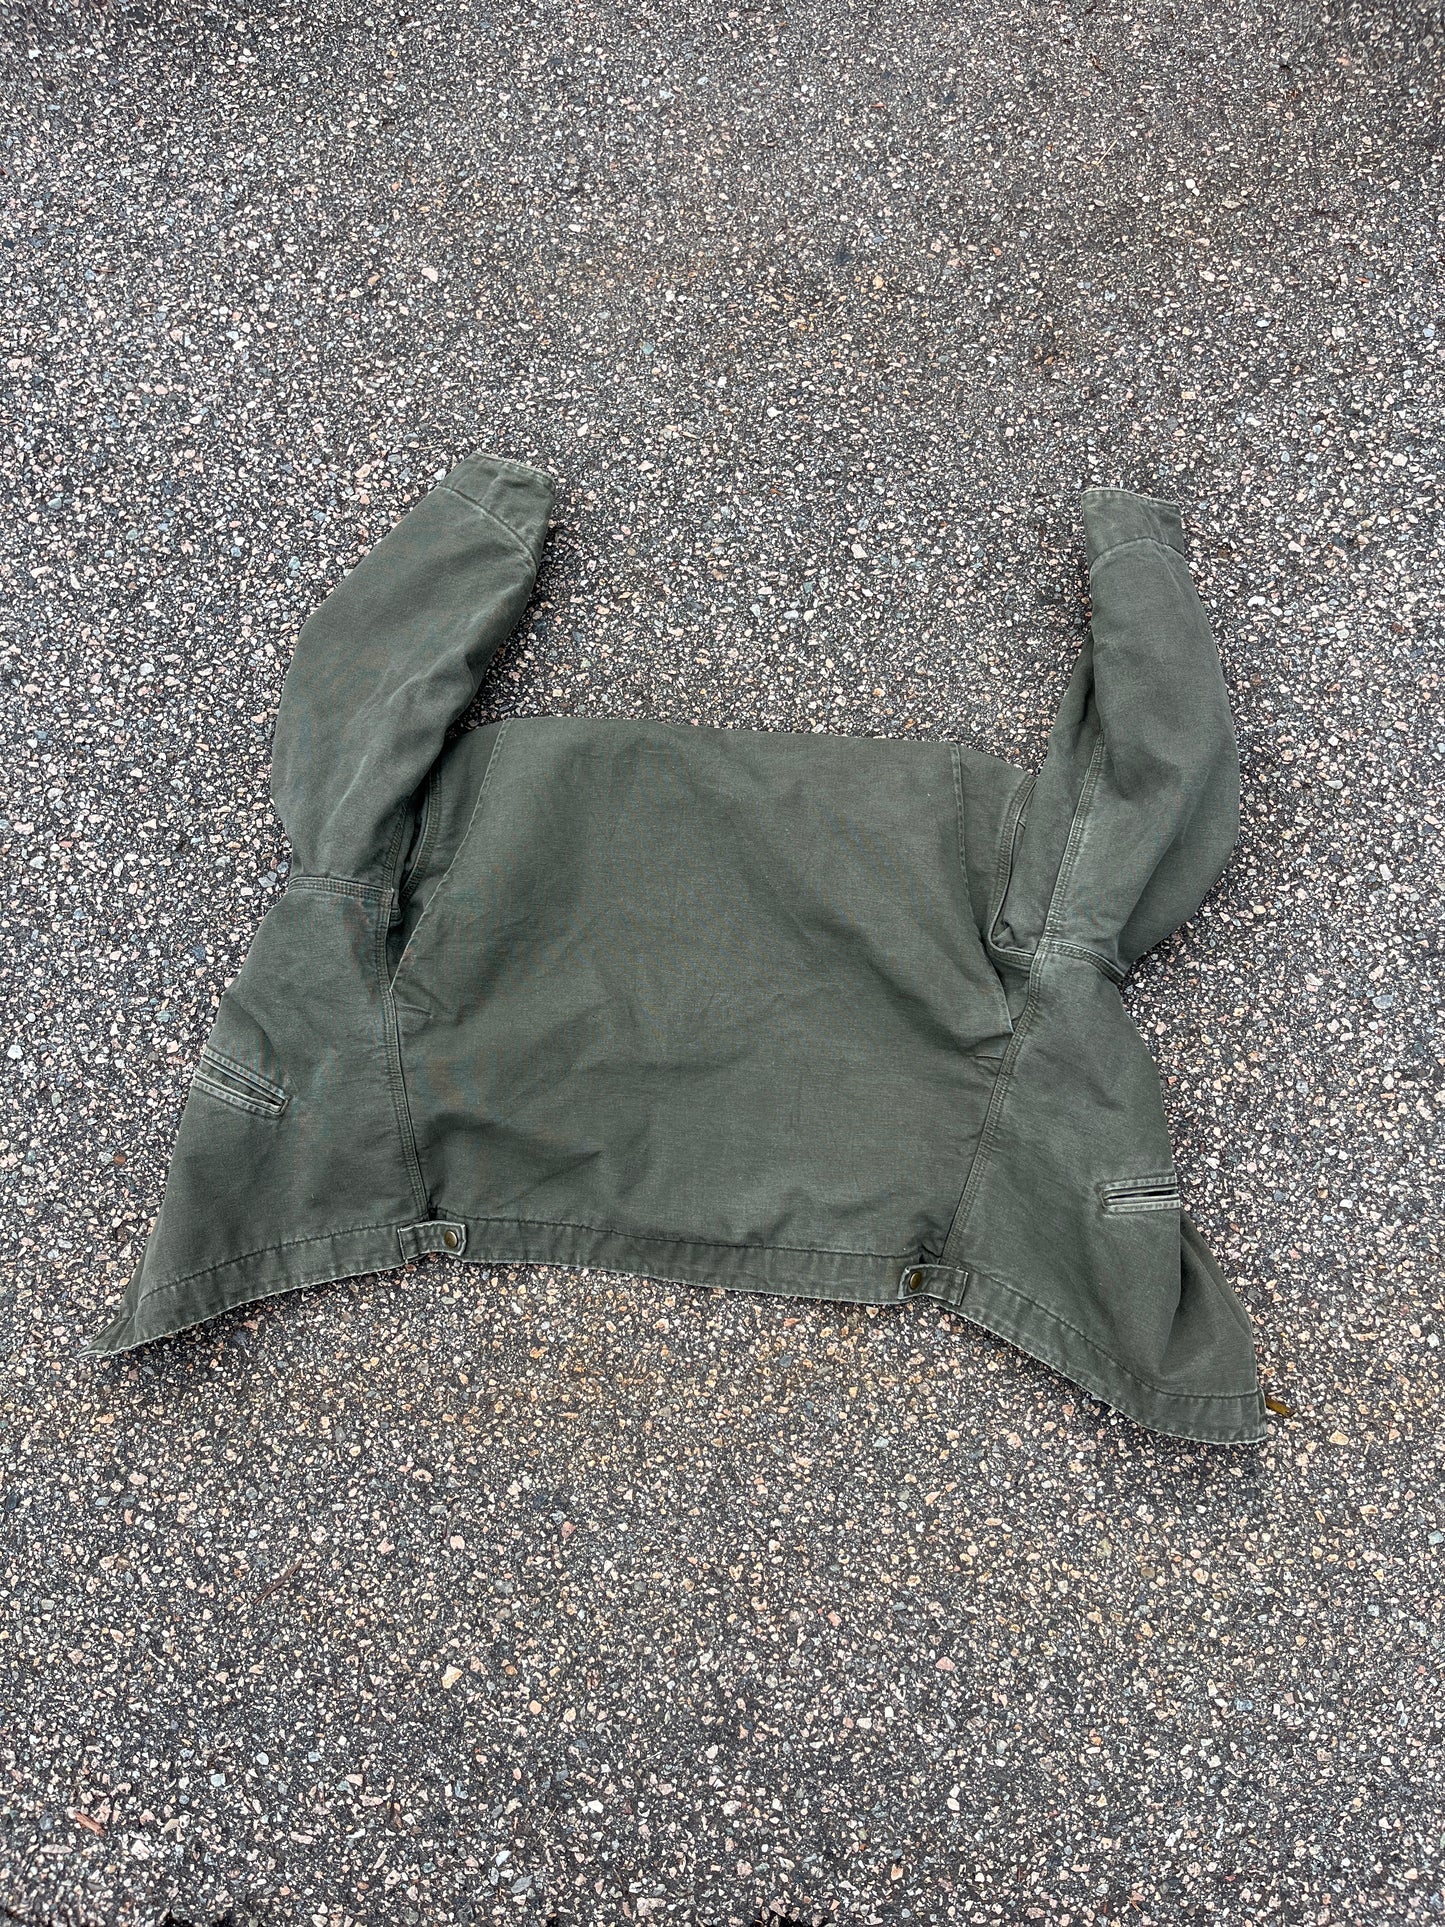 Faded Olive Green Carhartt Detroit Jacket - XL